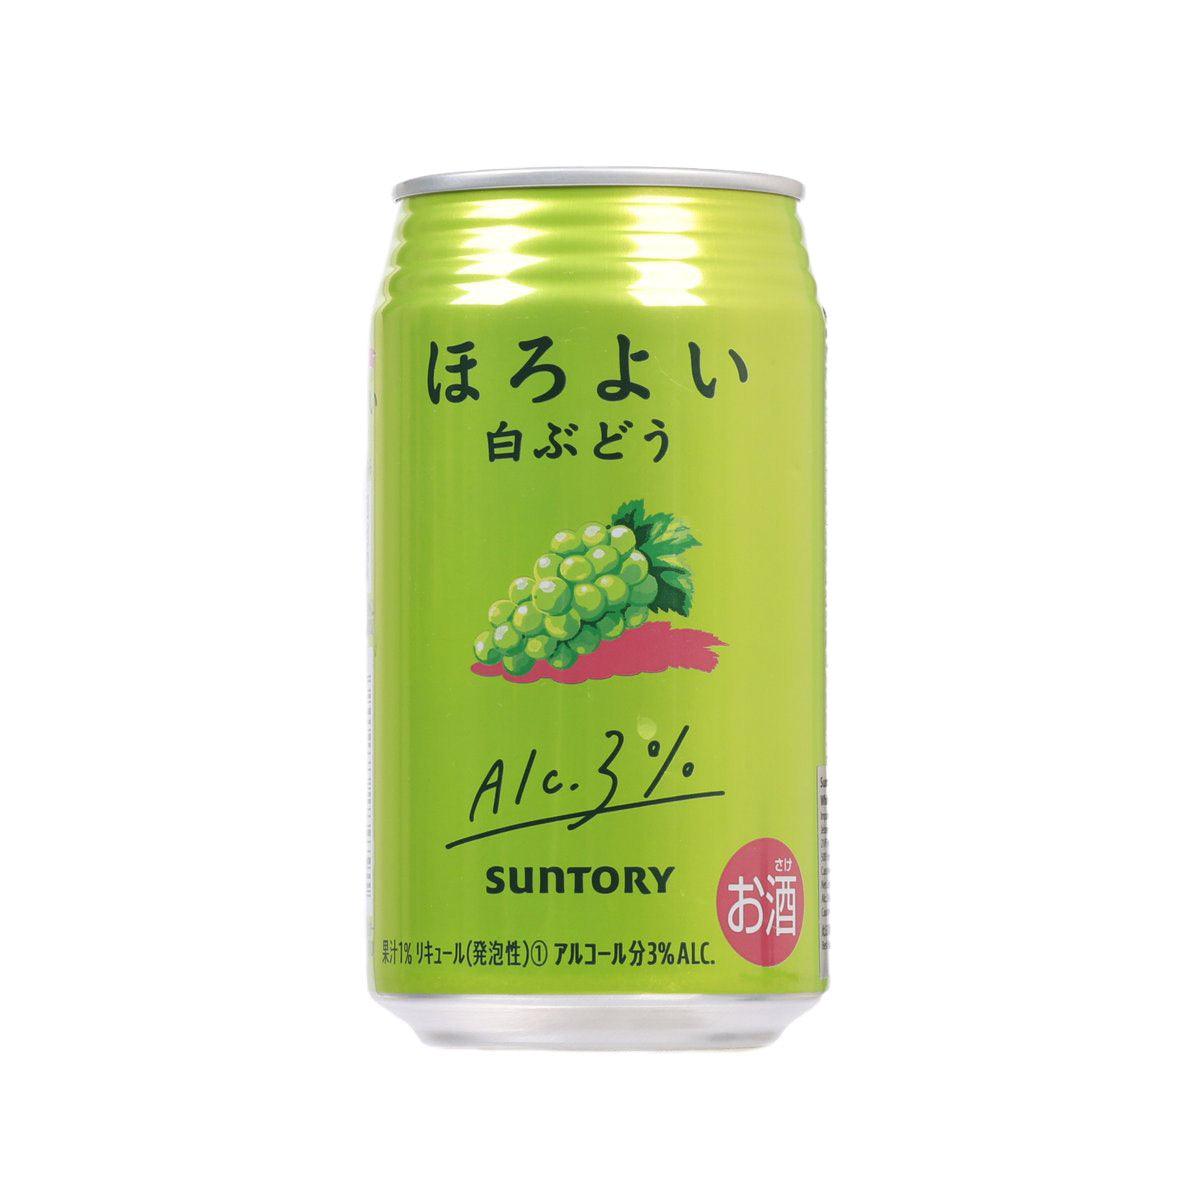 SUNTORY Horoyoi Chu-Hi - White Grape Flavor (Alc 3.0%) [Can 